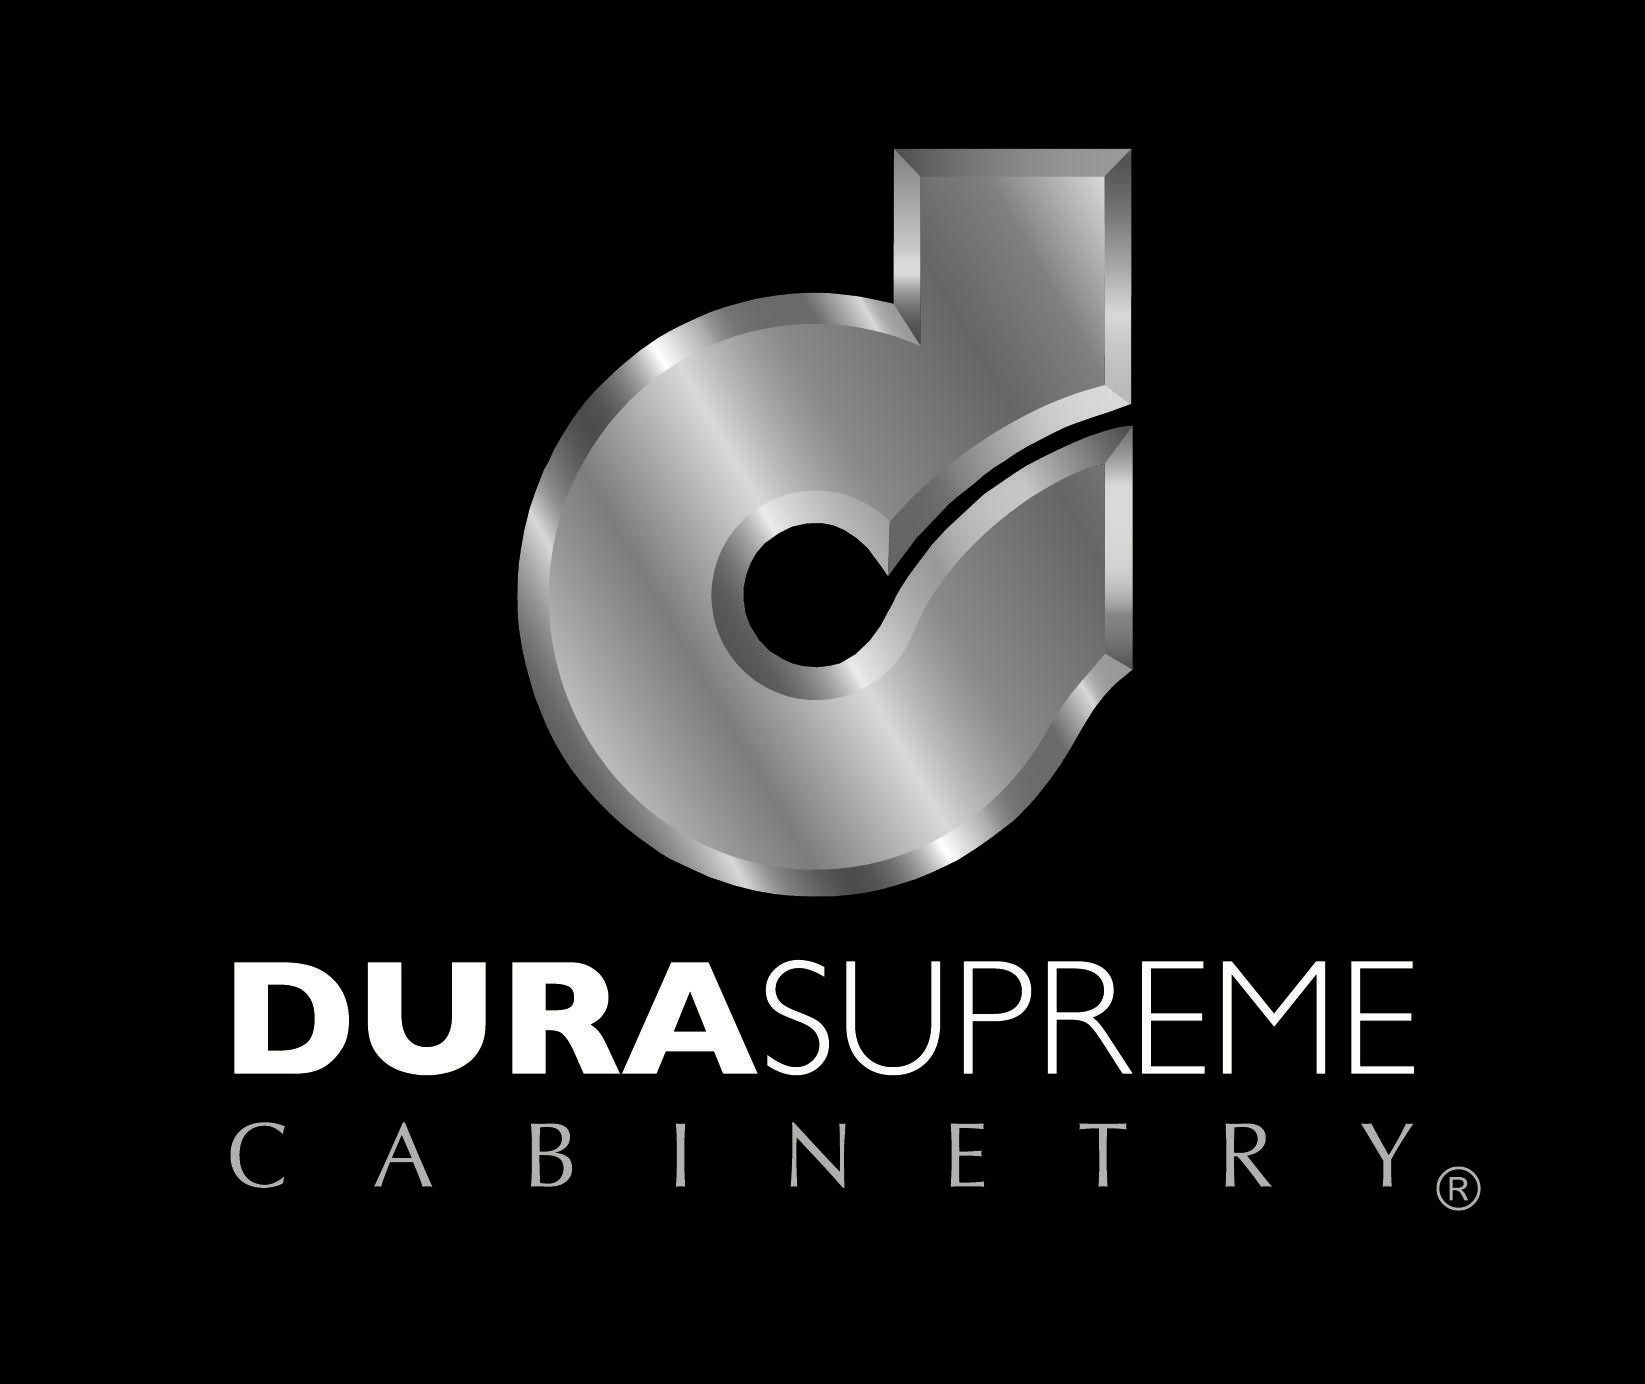 Dura Supreme Logo - Logo Files | Dura Supreme Cabinetry | Dura Supreme Cabinetry